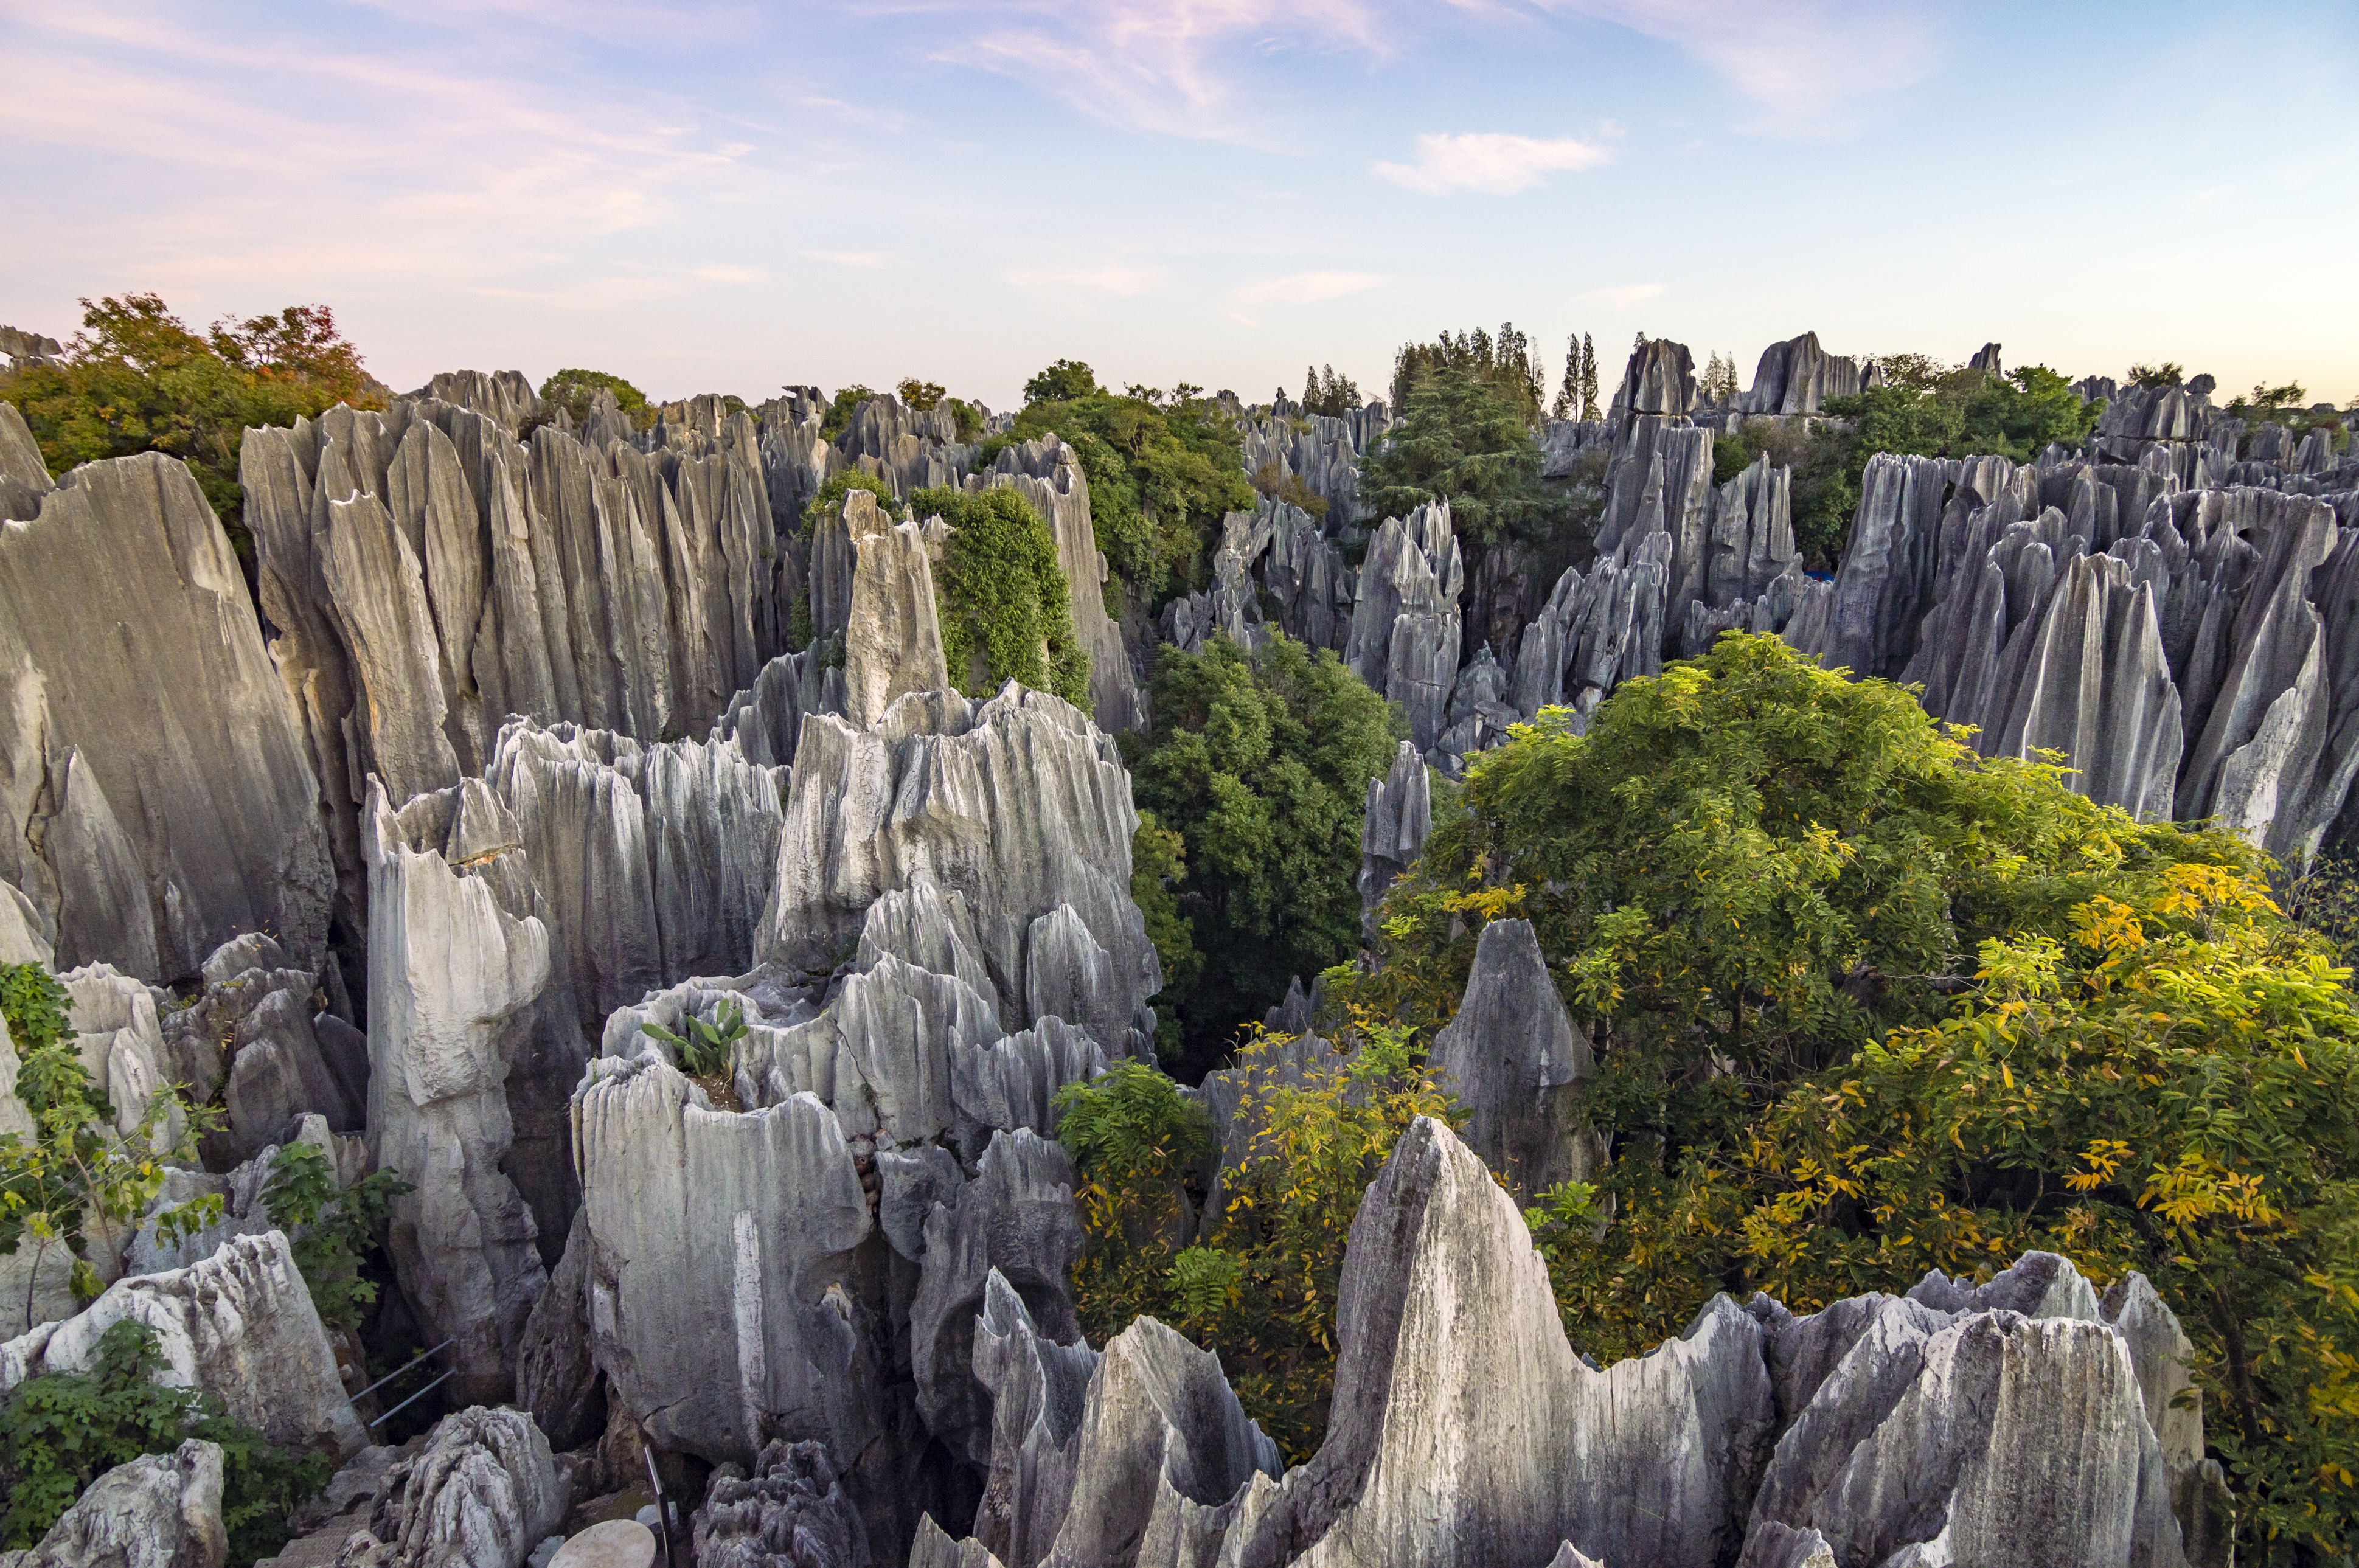 Le forêt de pierres de Shilin, dans la province du Yunnan (Chine). © Andrii_lutsyk, Adobe Stock